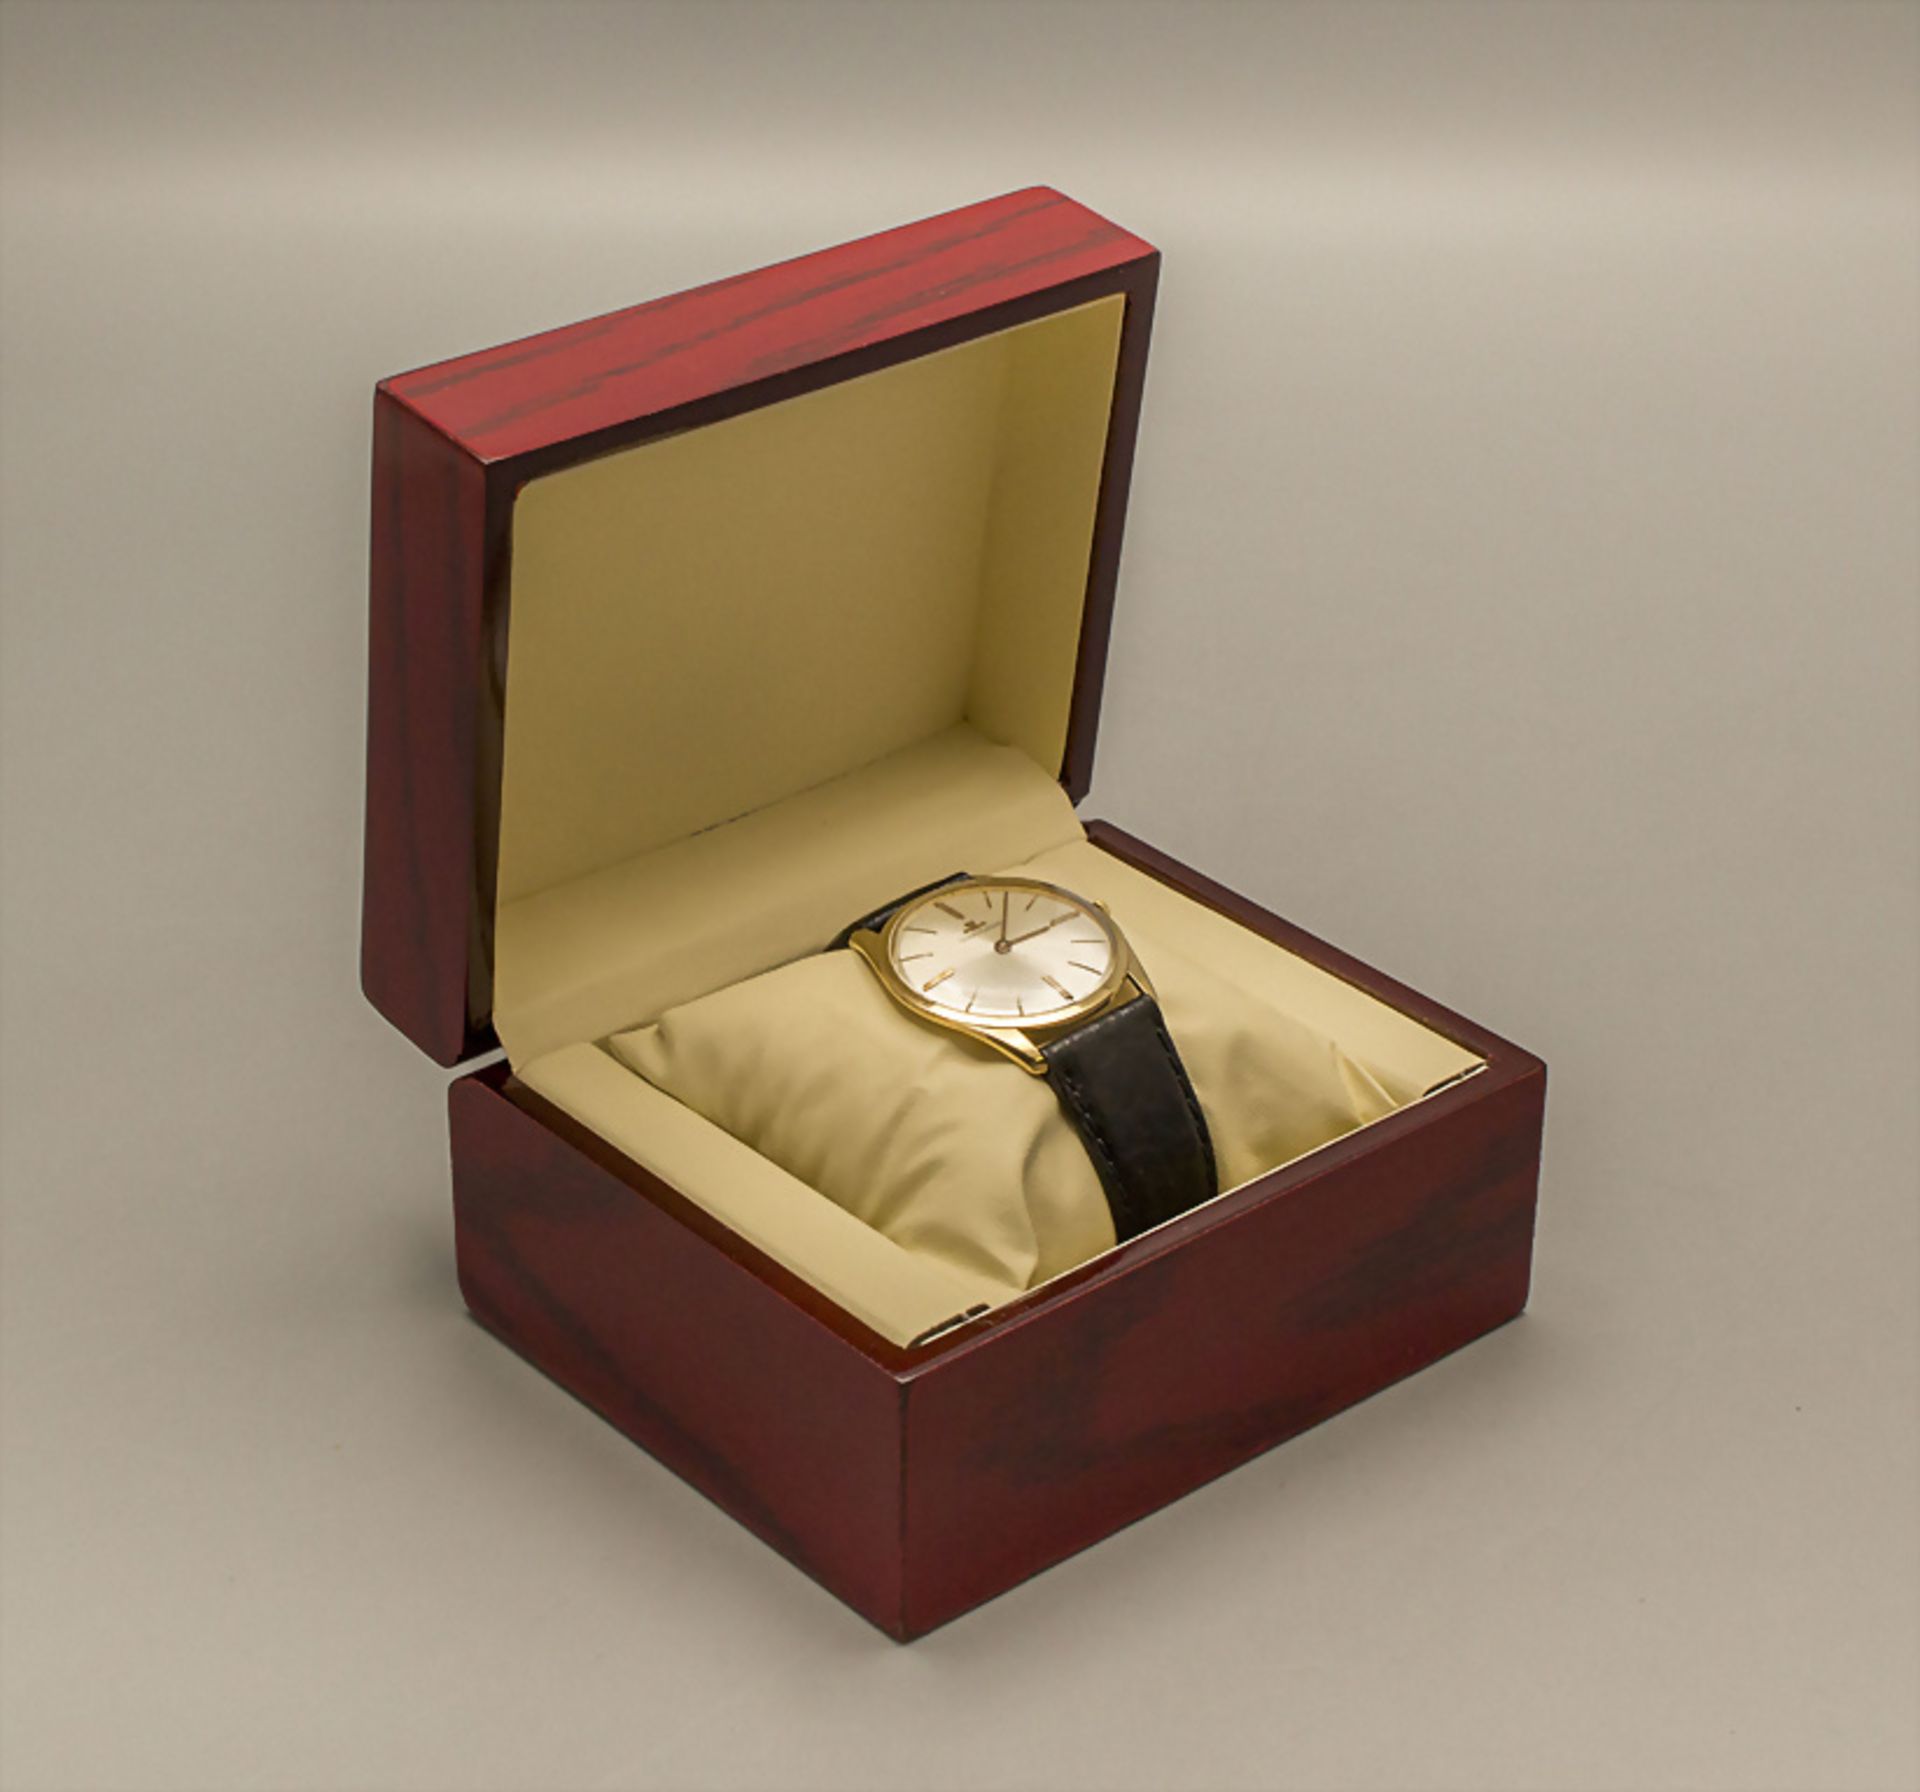 HAU Jäger Le Coultre, Handaufzug / A men's wrist watch, Schweiz / Swiss, 60er/70er Jahre